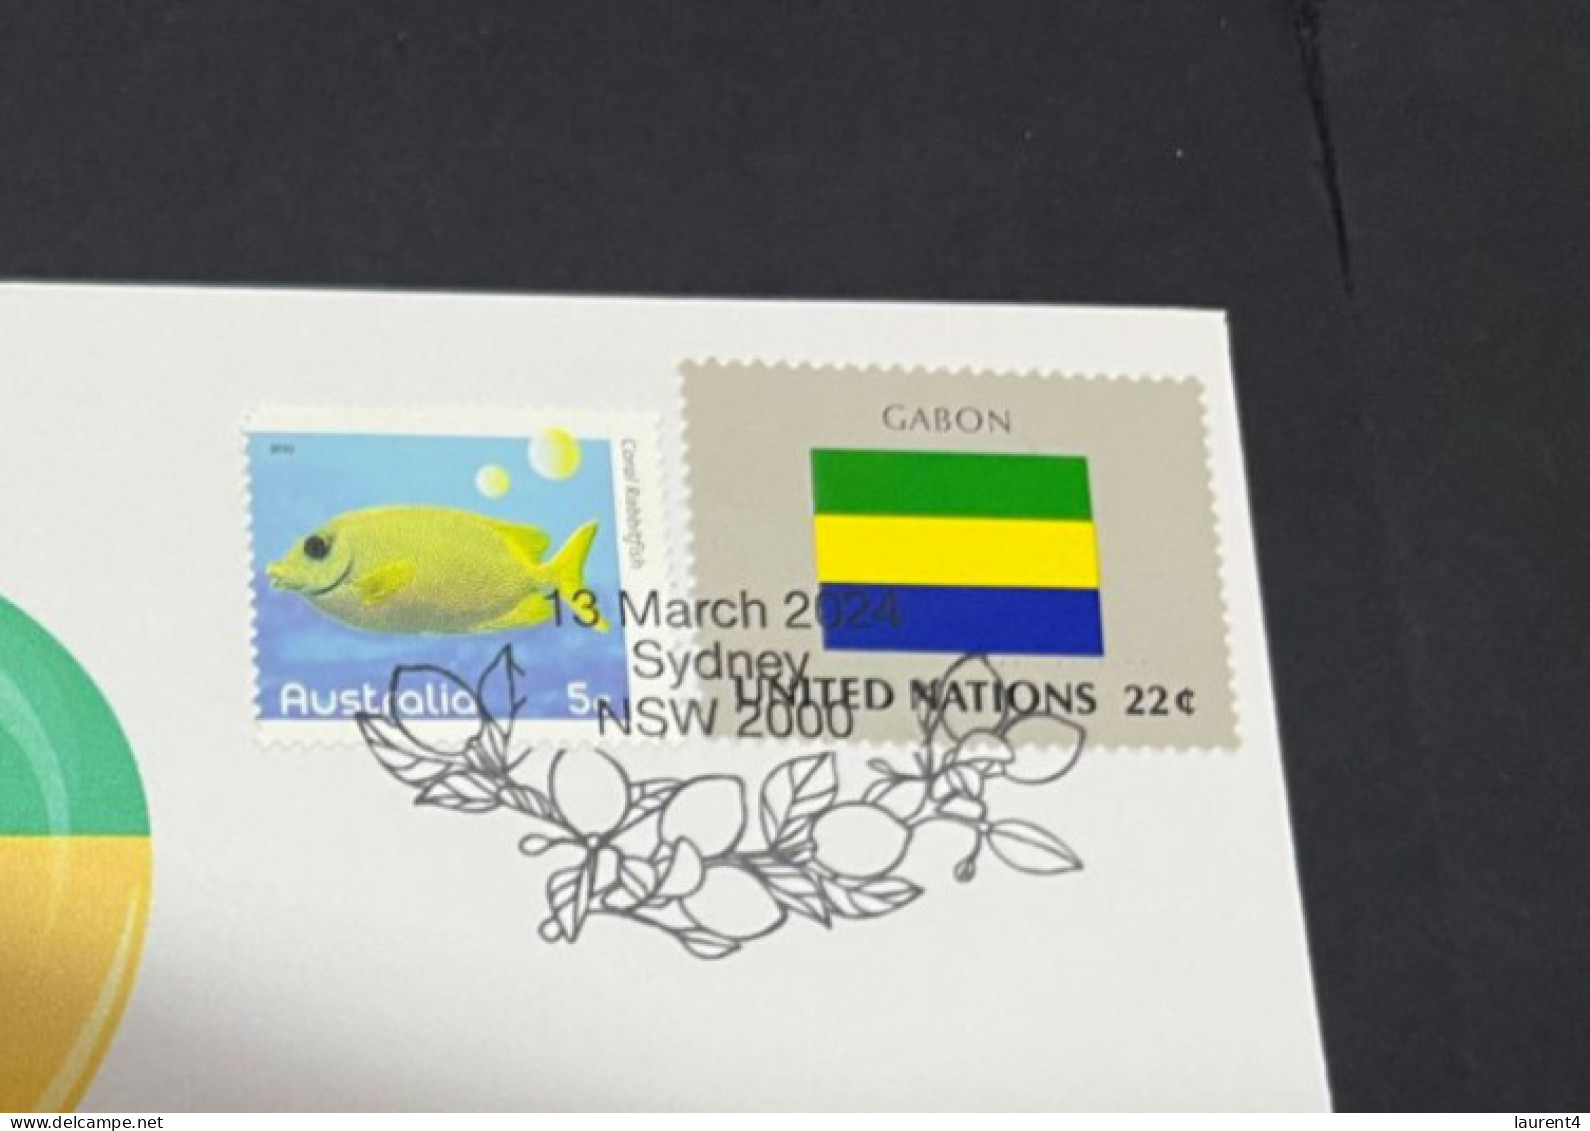 13-3-2024 (2 Y 52) COVID-19 4th Anniversary - Gabon - 13 March 2024 (with Gabon UN Flag Stamp) - Disease